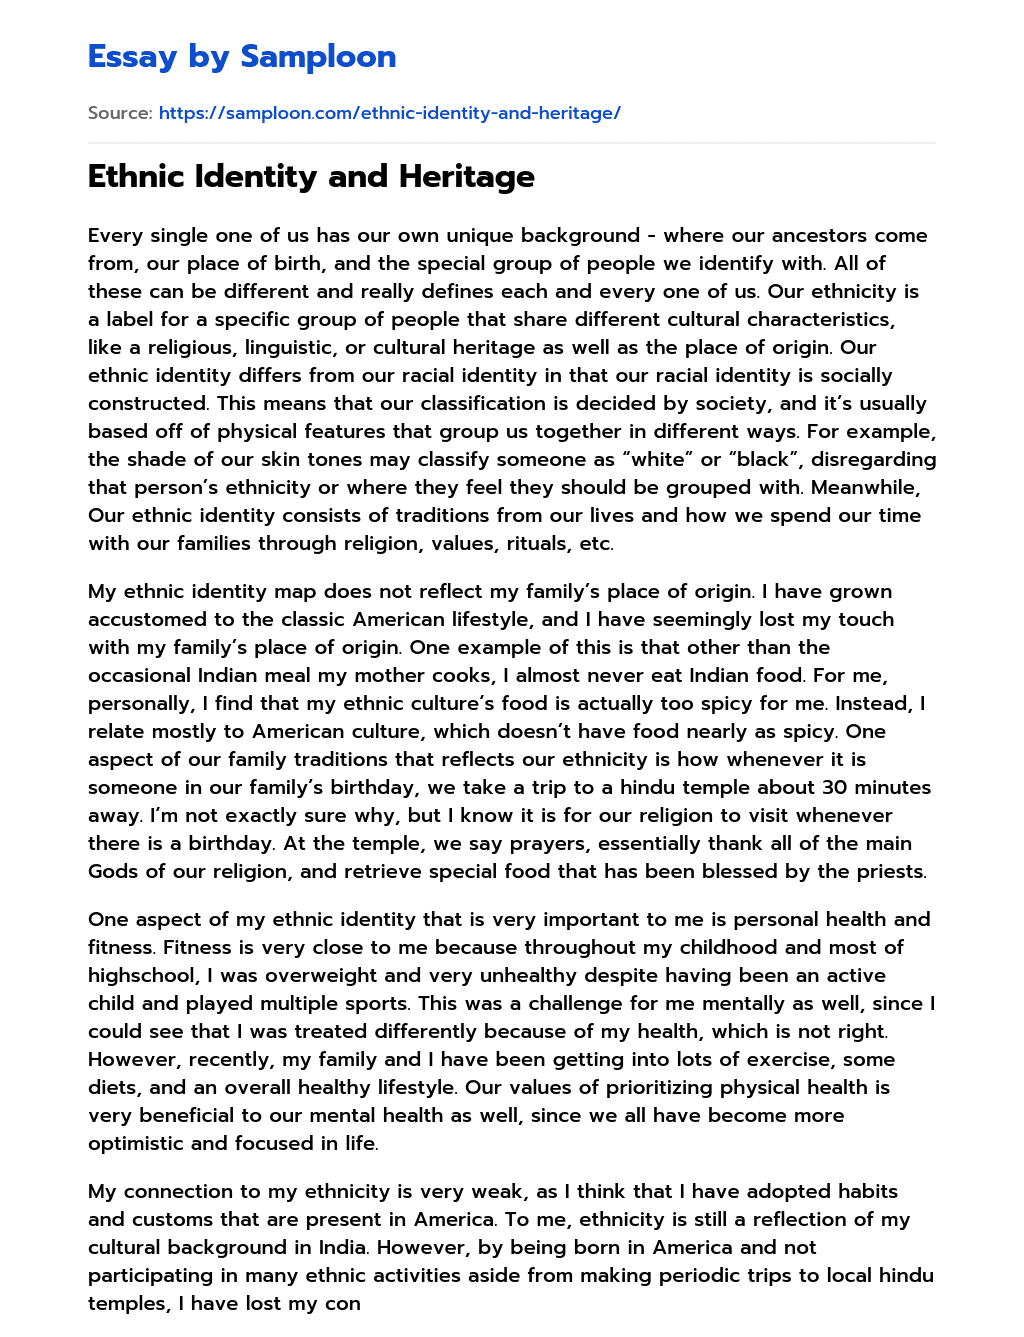 Ethnic Identity and Heritage essay